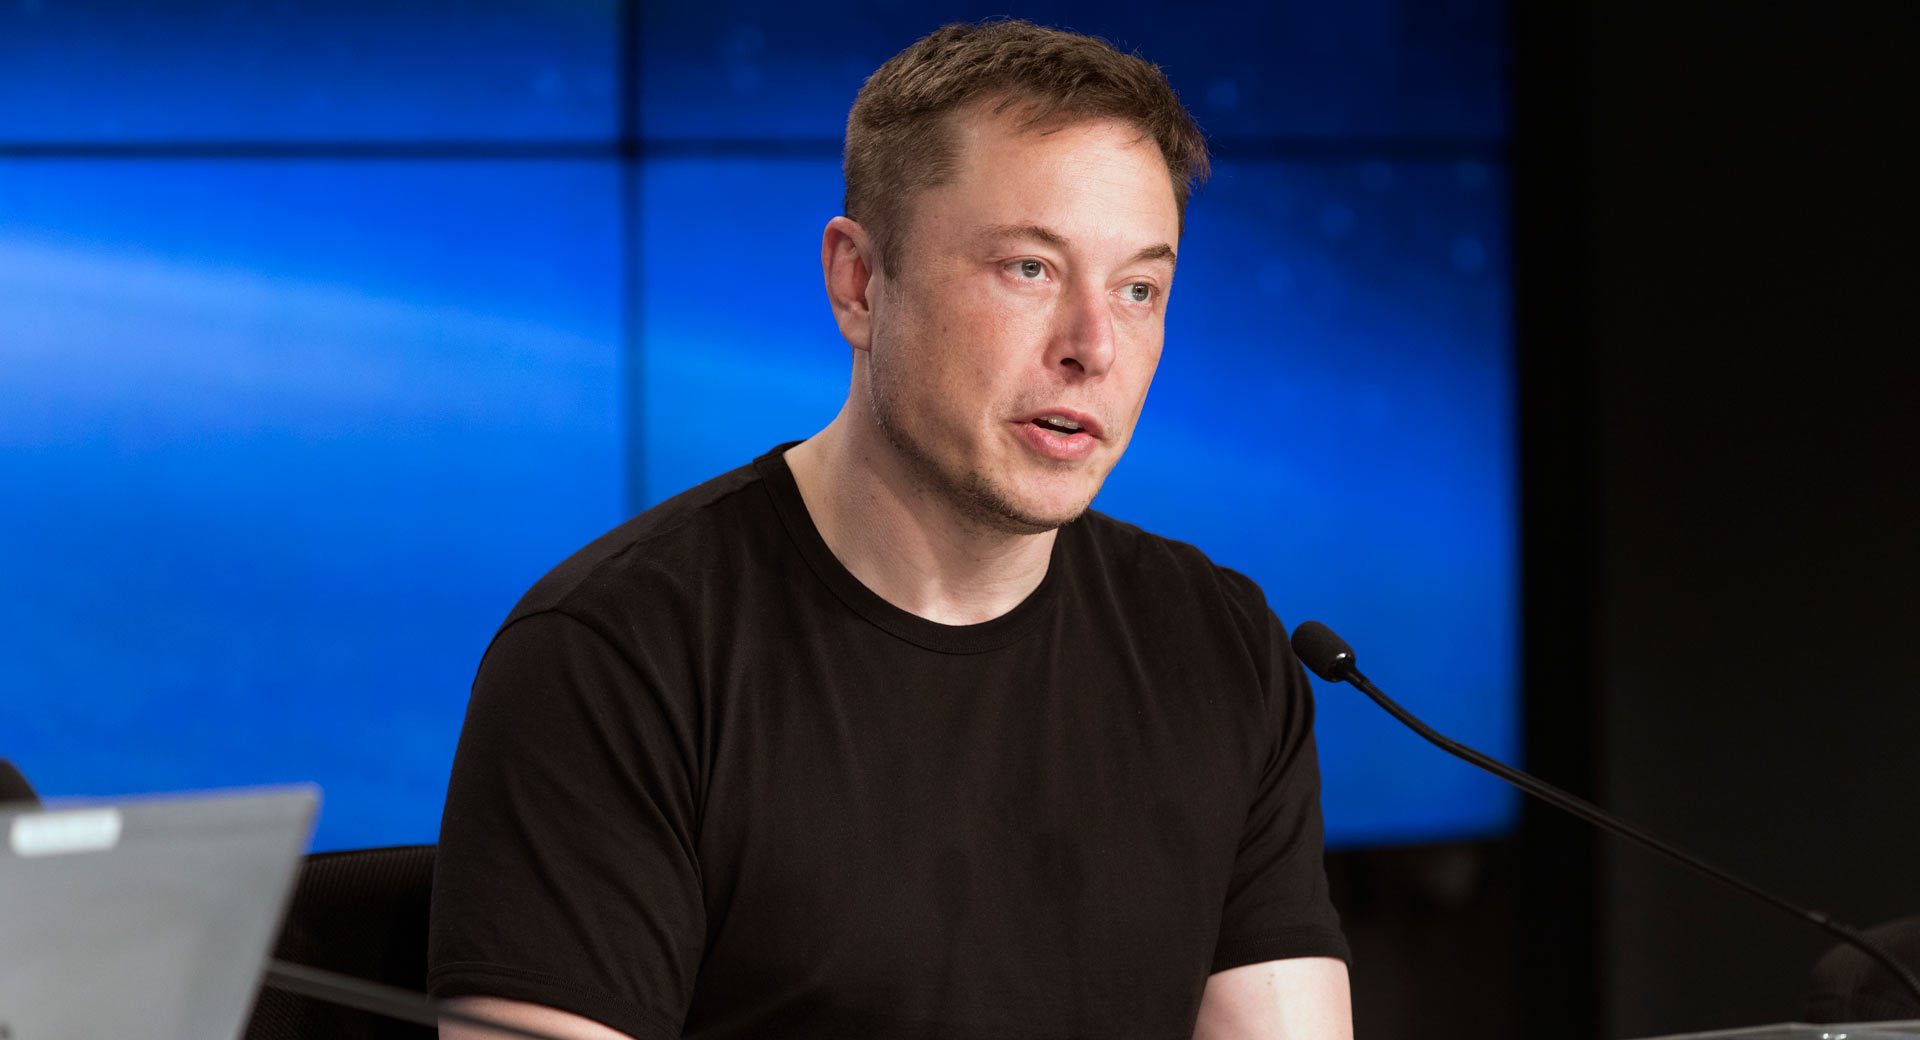 Musk Goes From Calling Virus Panic Dumb To Saying His Companies Could Make Ventilators